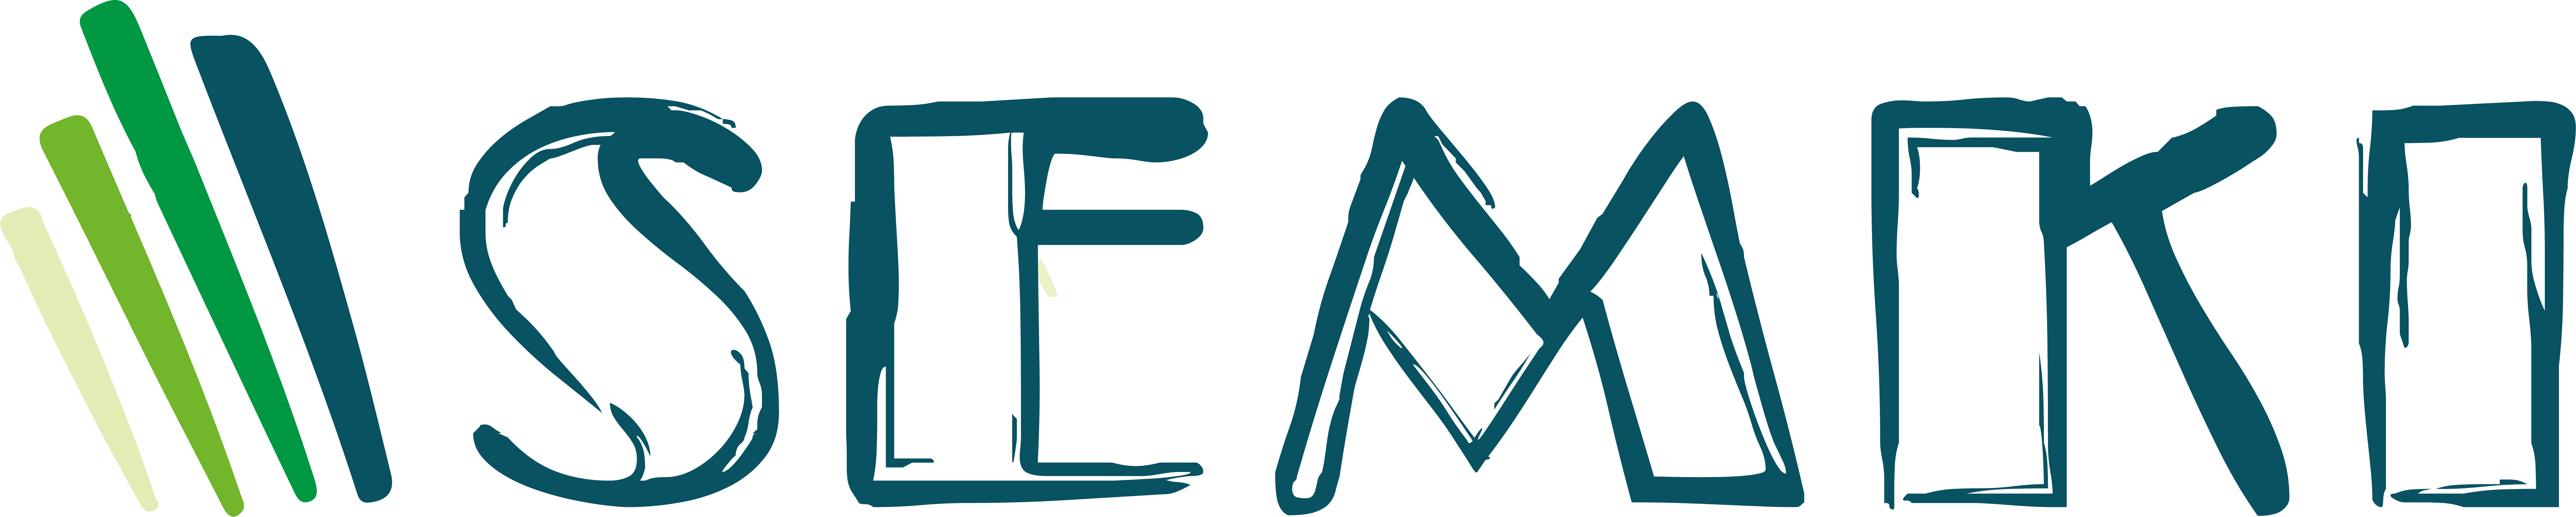 semki logo